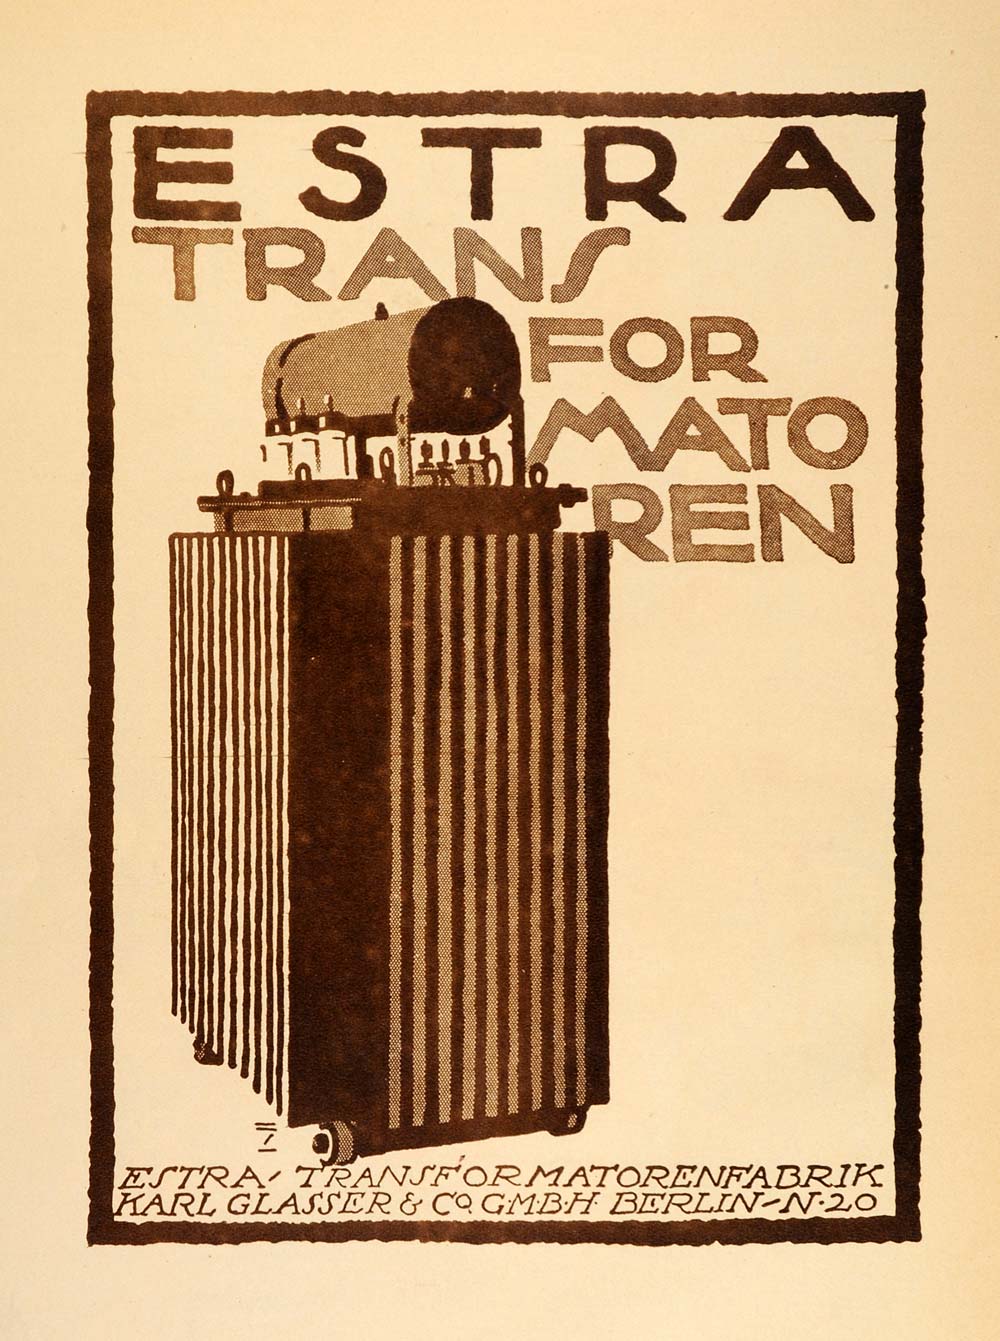 1926 Photogravure Hohlwein Estra Transformatoren Transformer German Poster Art